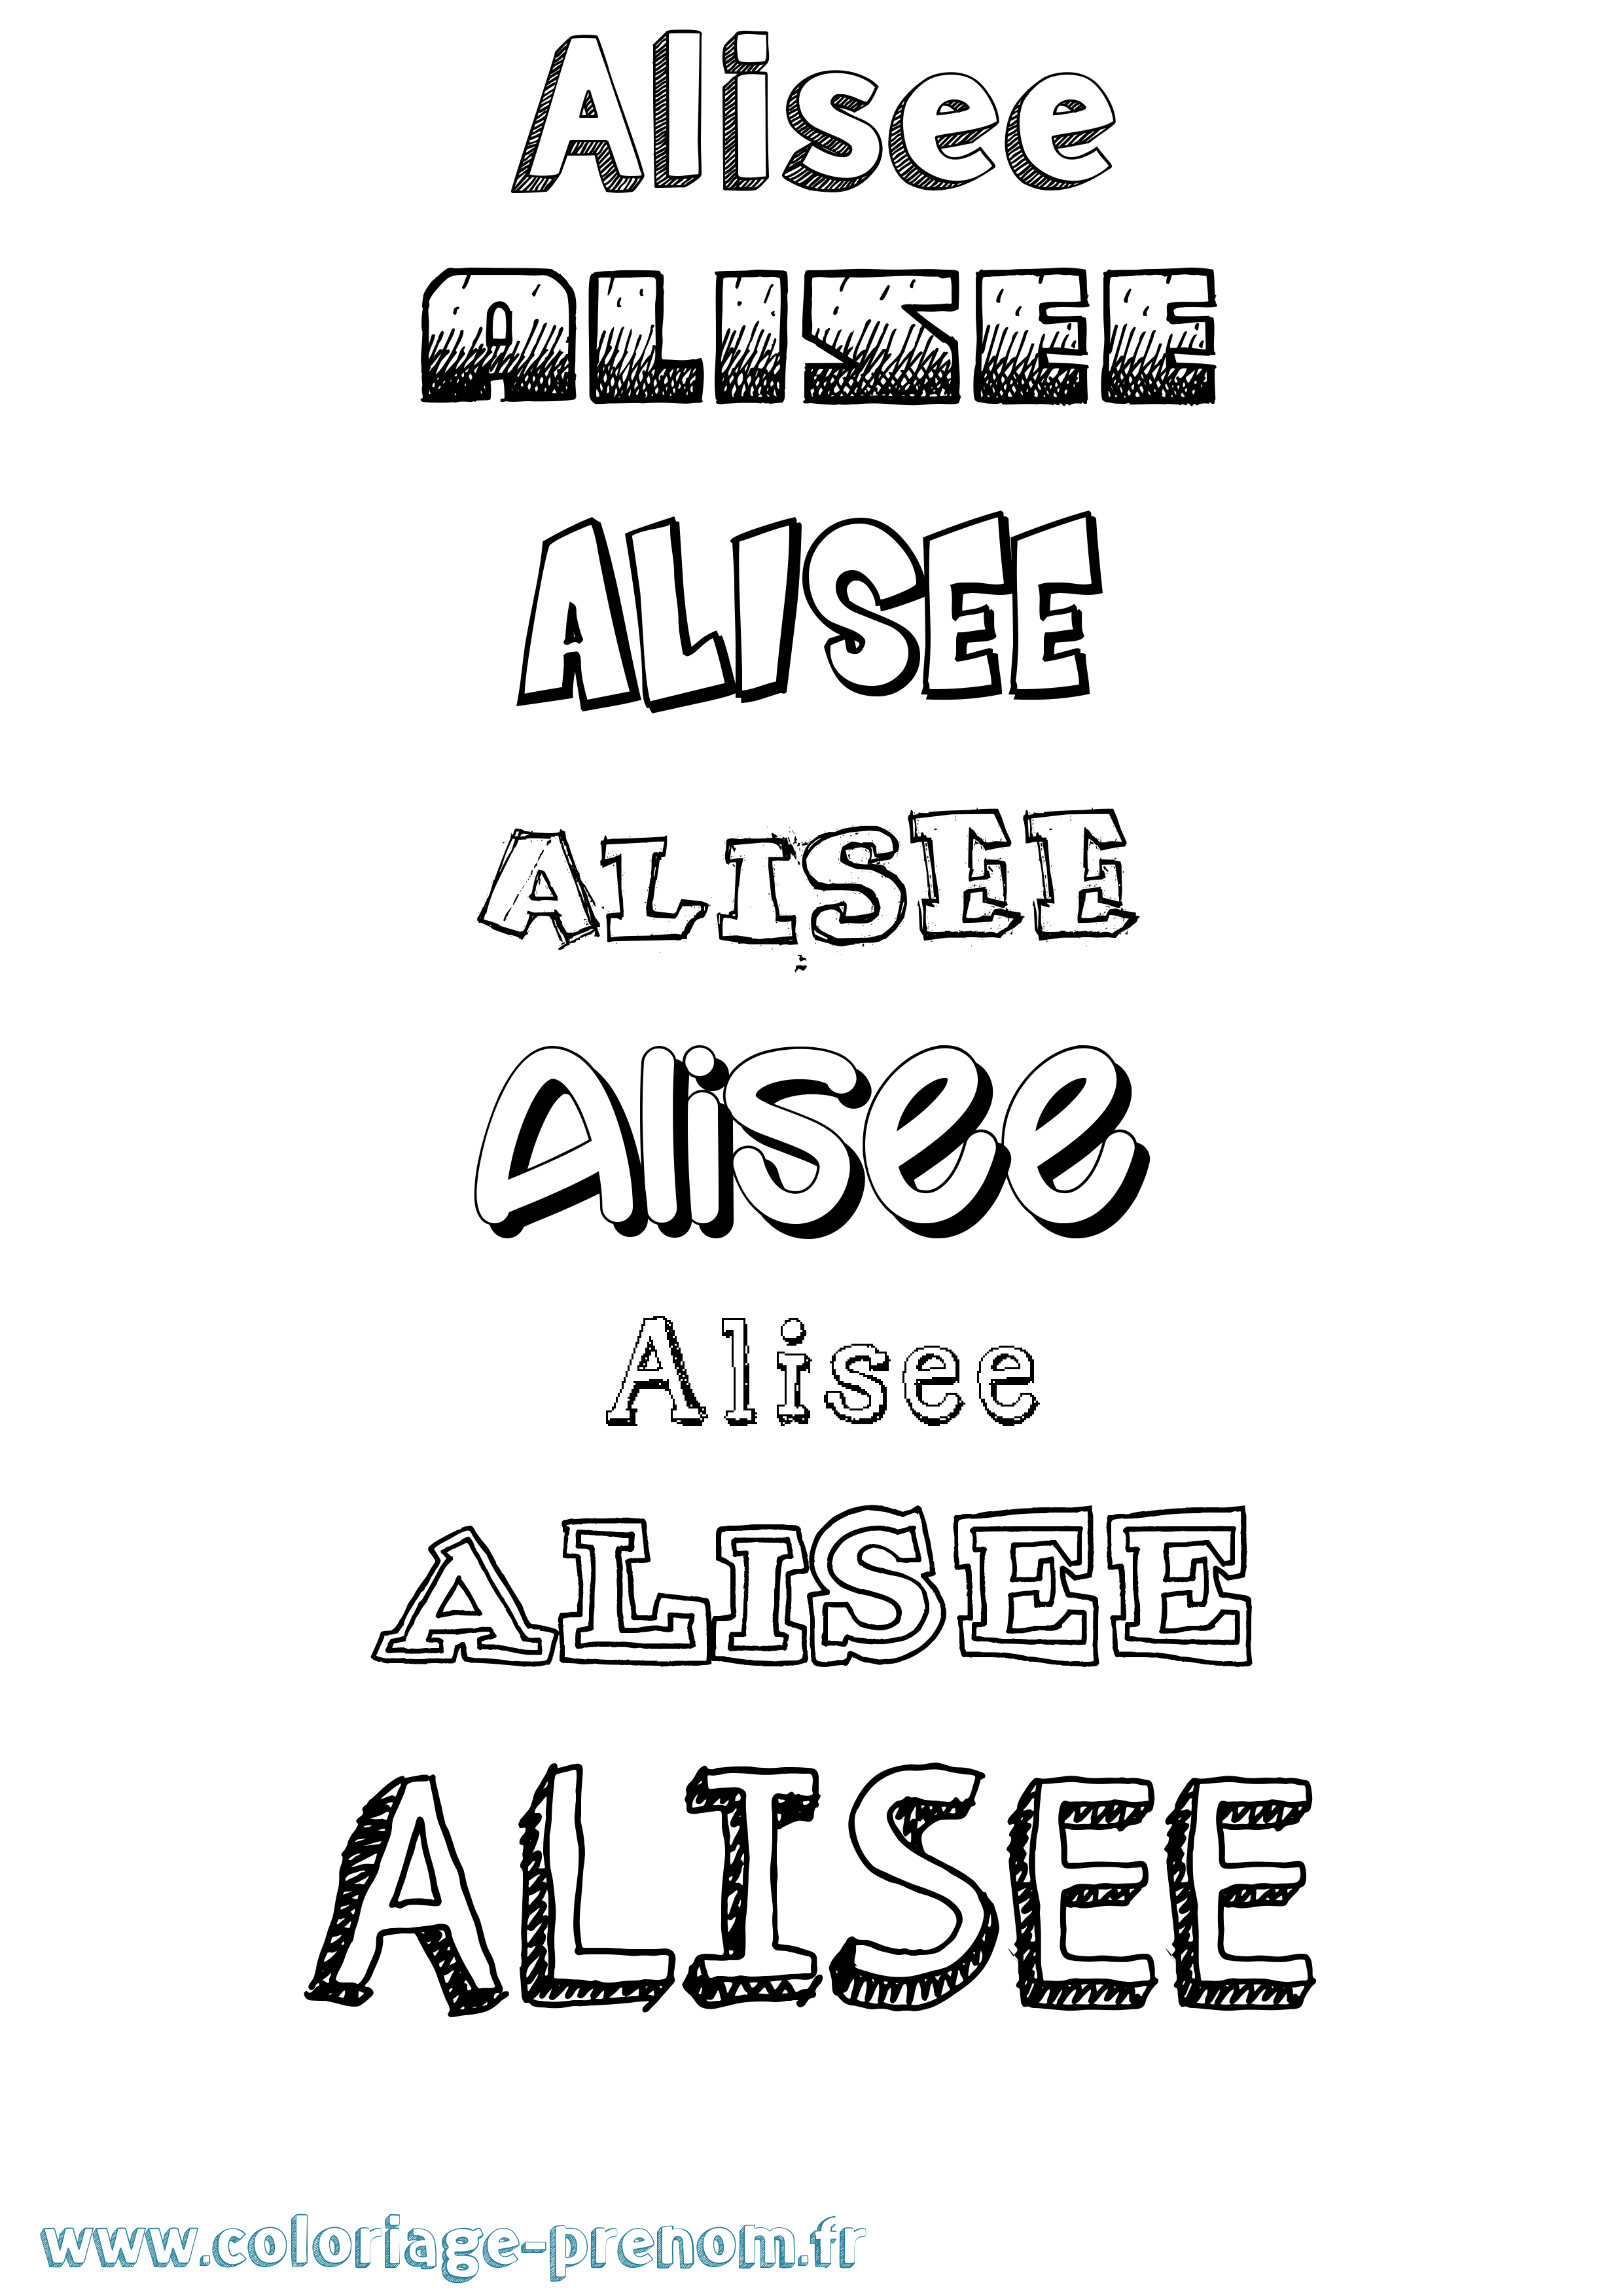 Coloriage prénom Alisee Dessiné